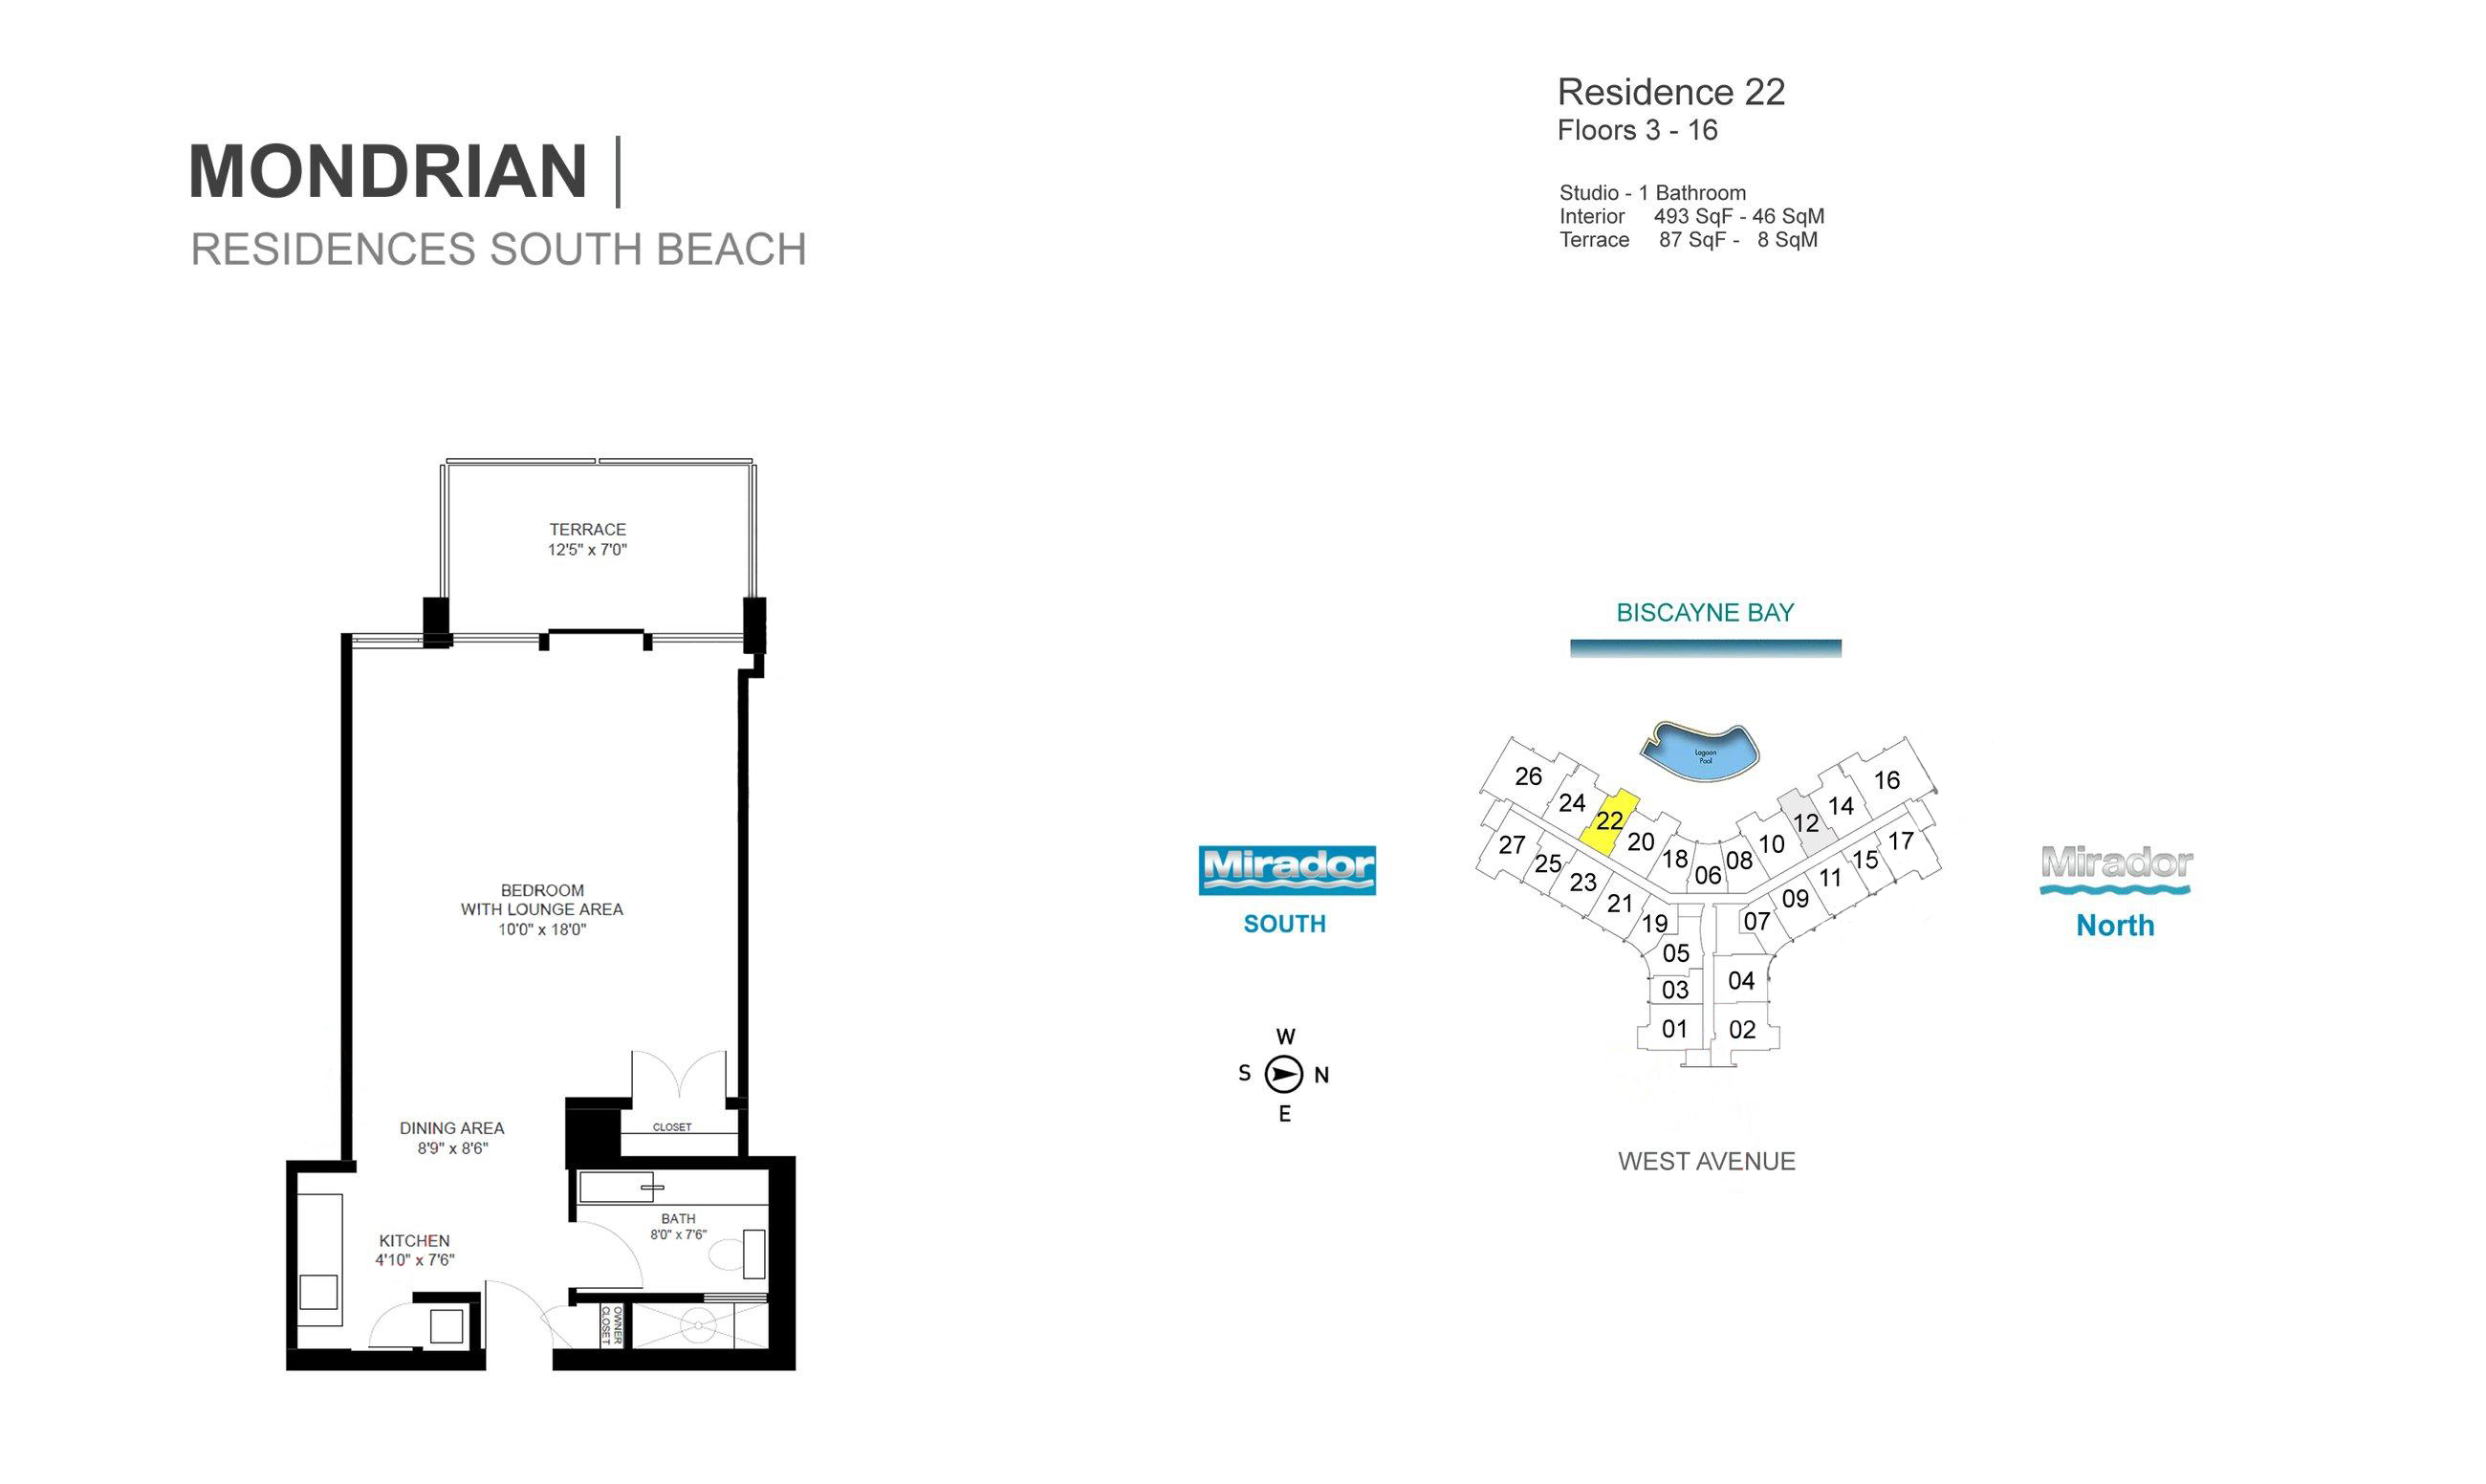 Mondrian South Beach Residence 22